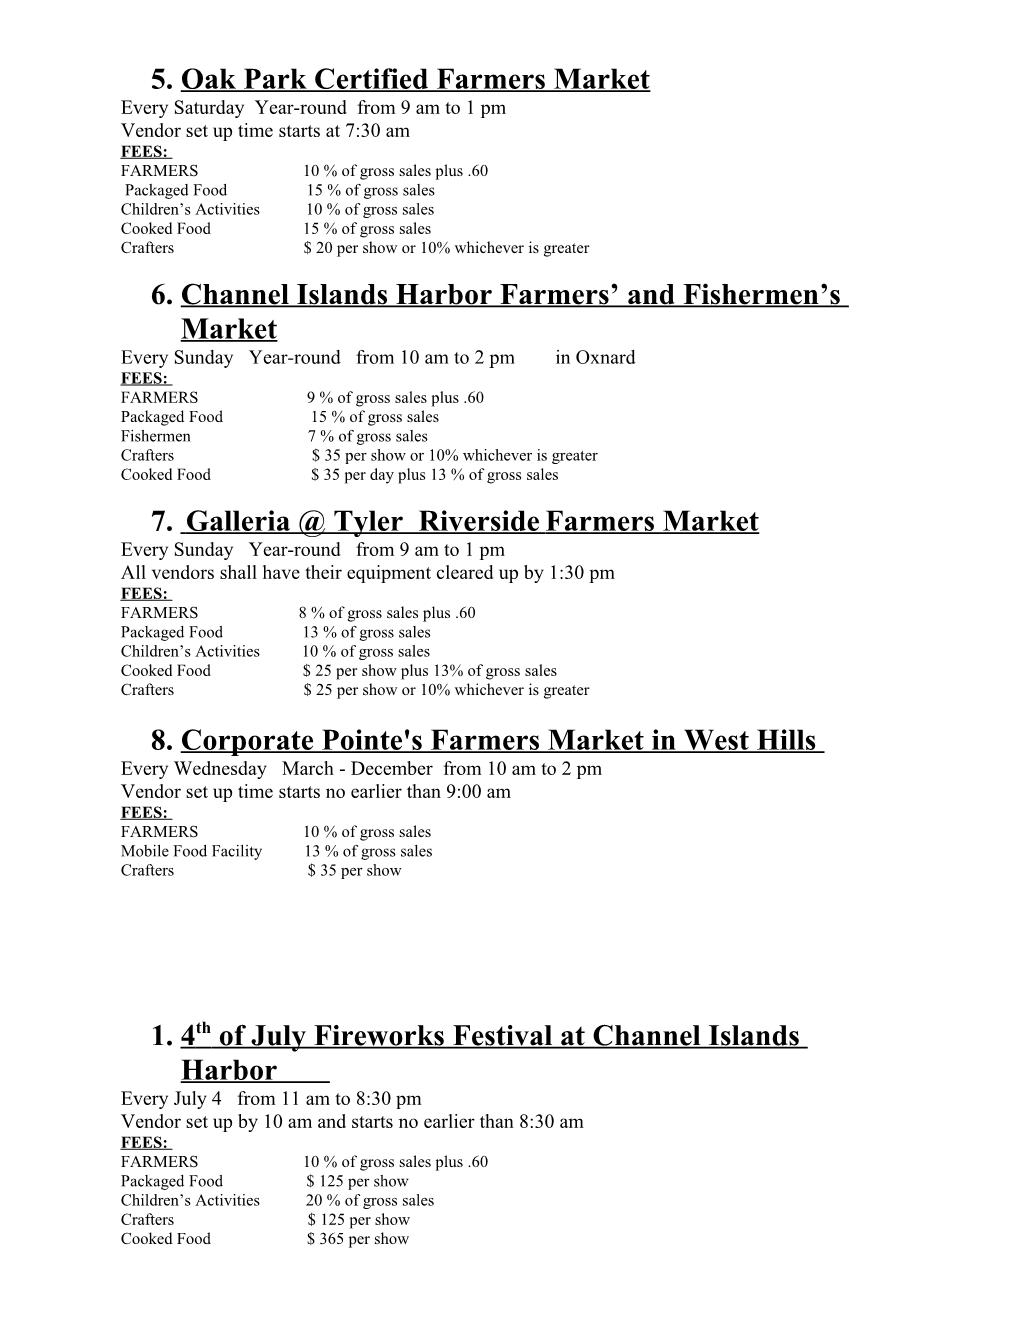 FMOCIH Inc/Coastal Pacific LLC MARKETS FEES